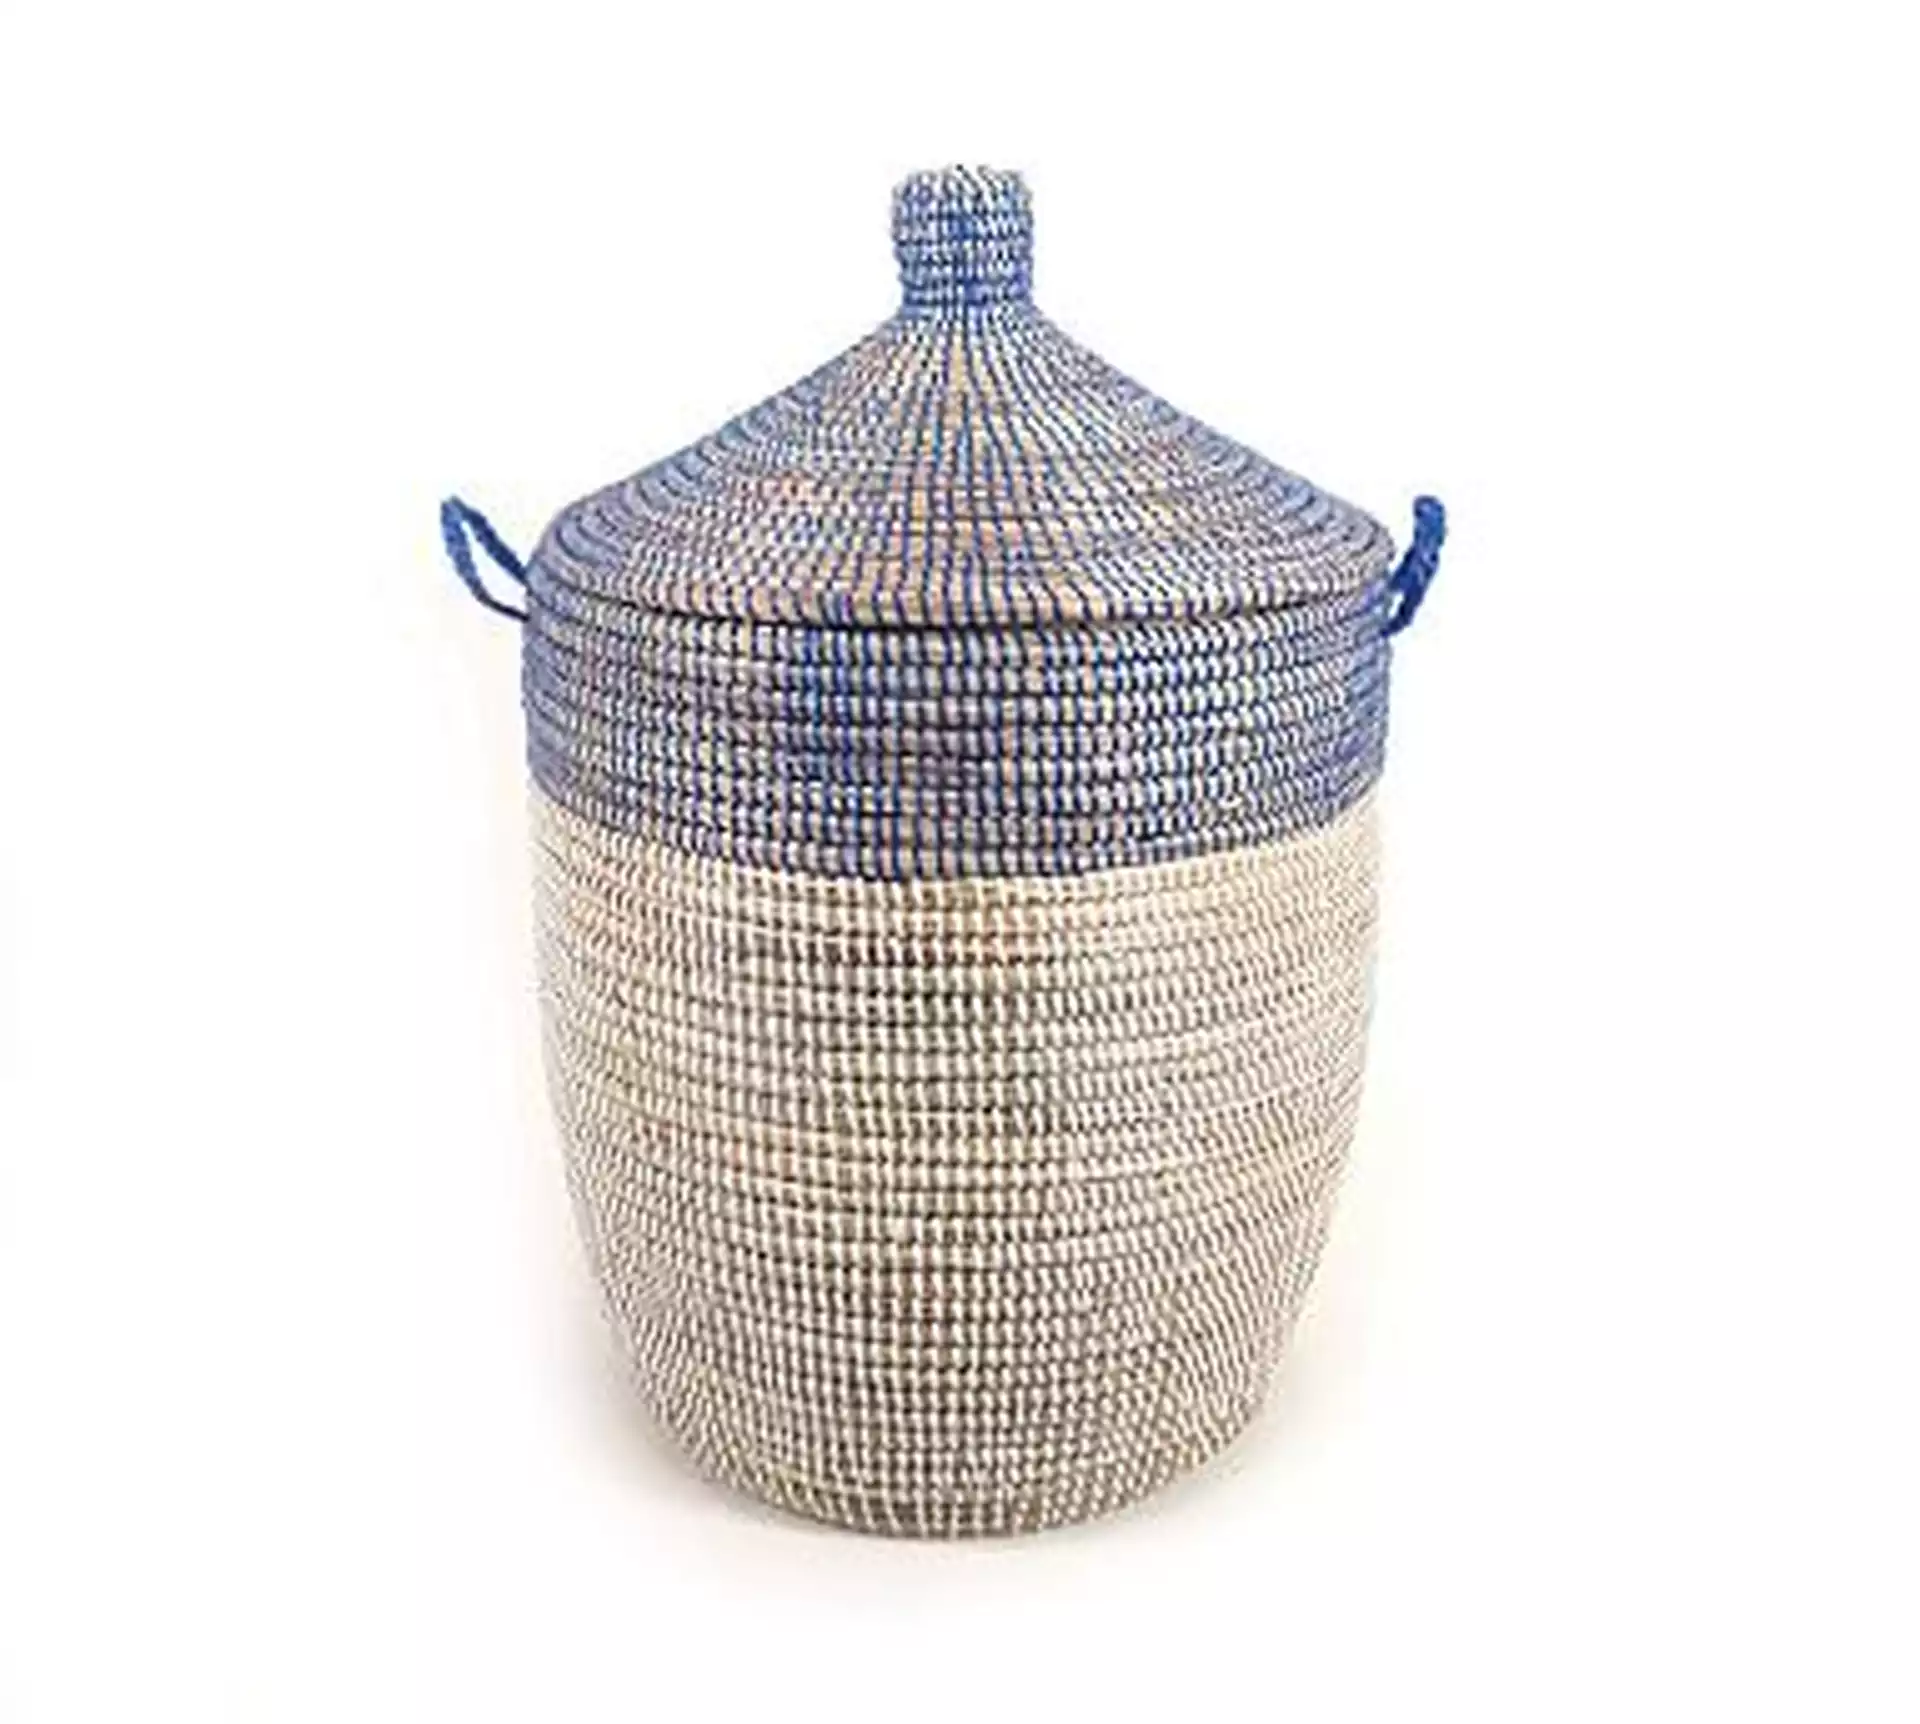 Tilda Two-Tone Woven Basket, Navy - Medium